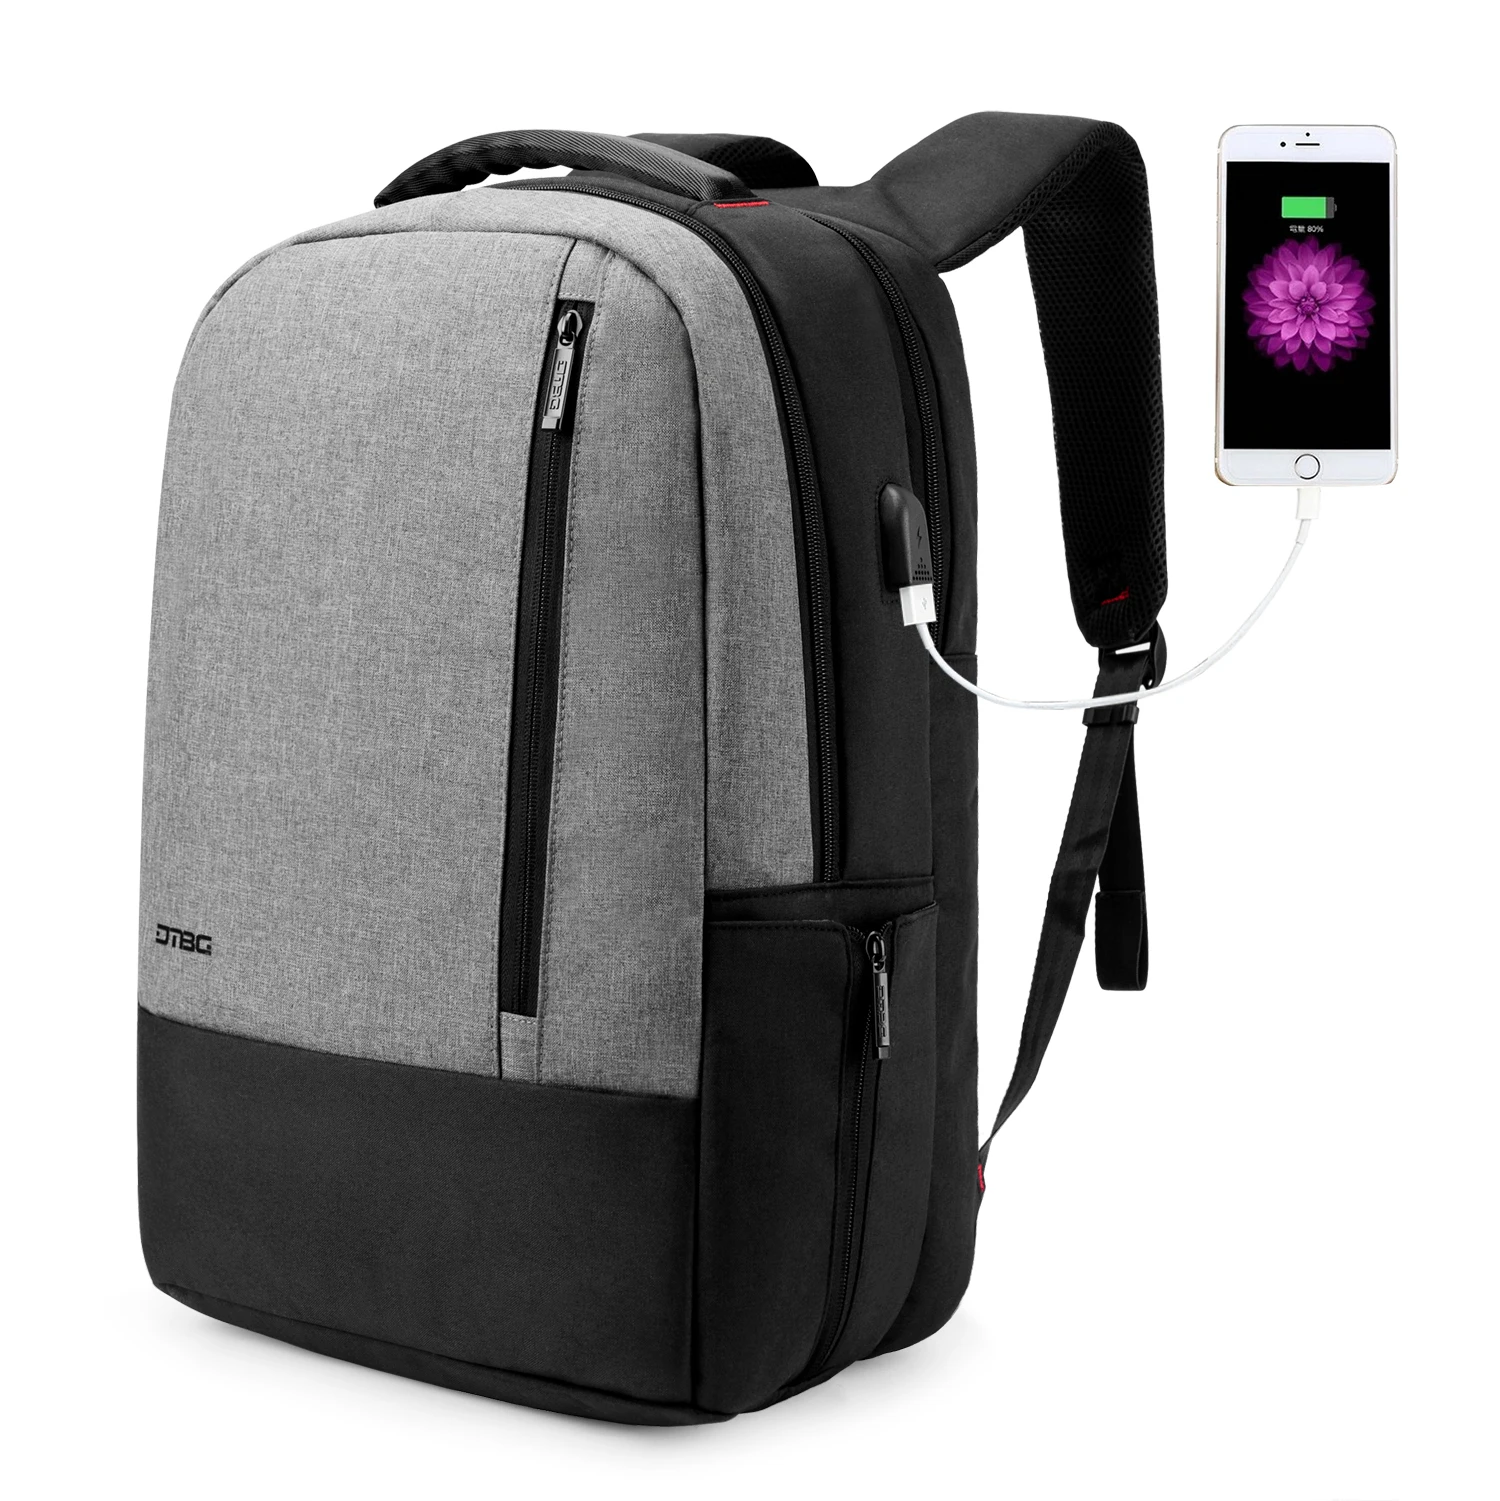 

DTBG 17.3 Inch Laptop Backpack Multi-Functional Daypack Water-Resistant Travel Rucksack Business Backpack with USB Charging Port